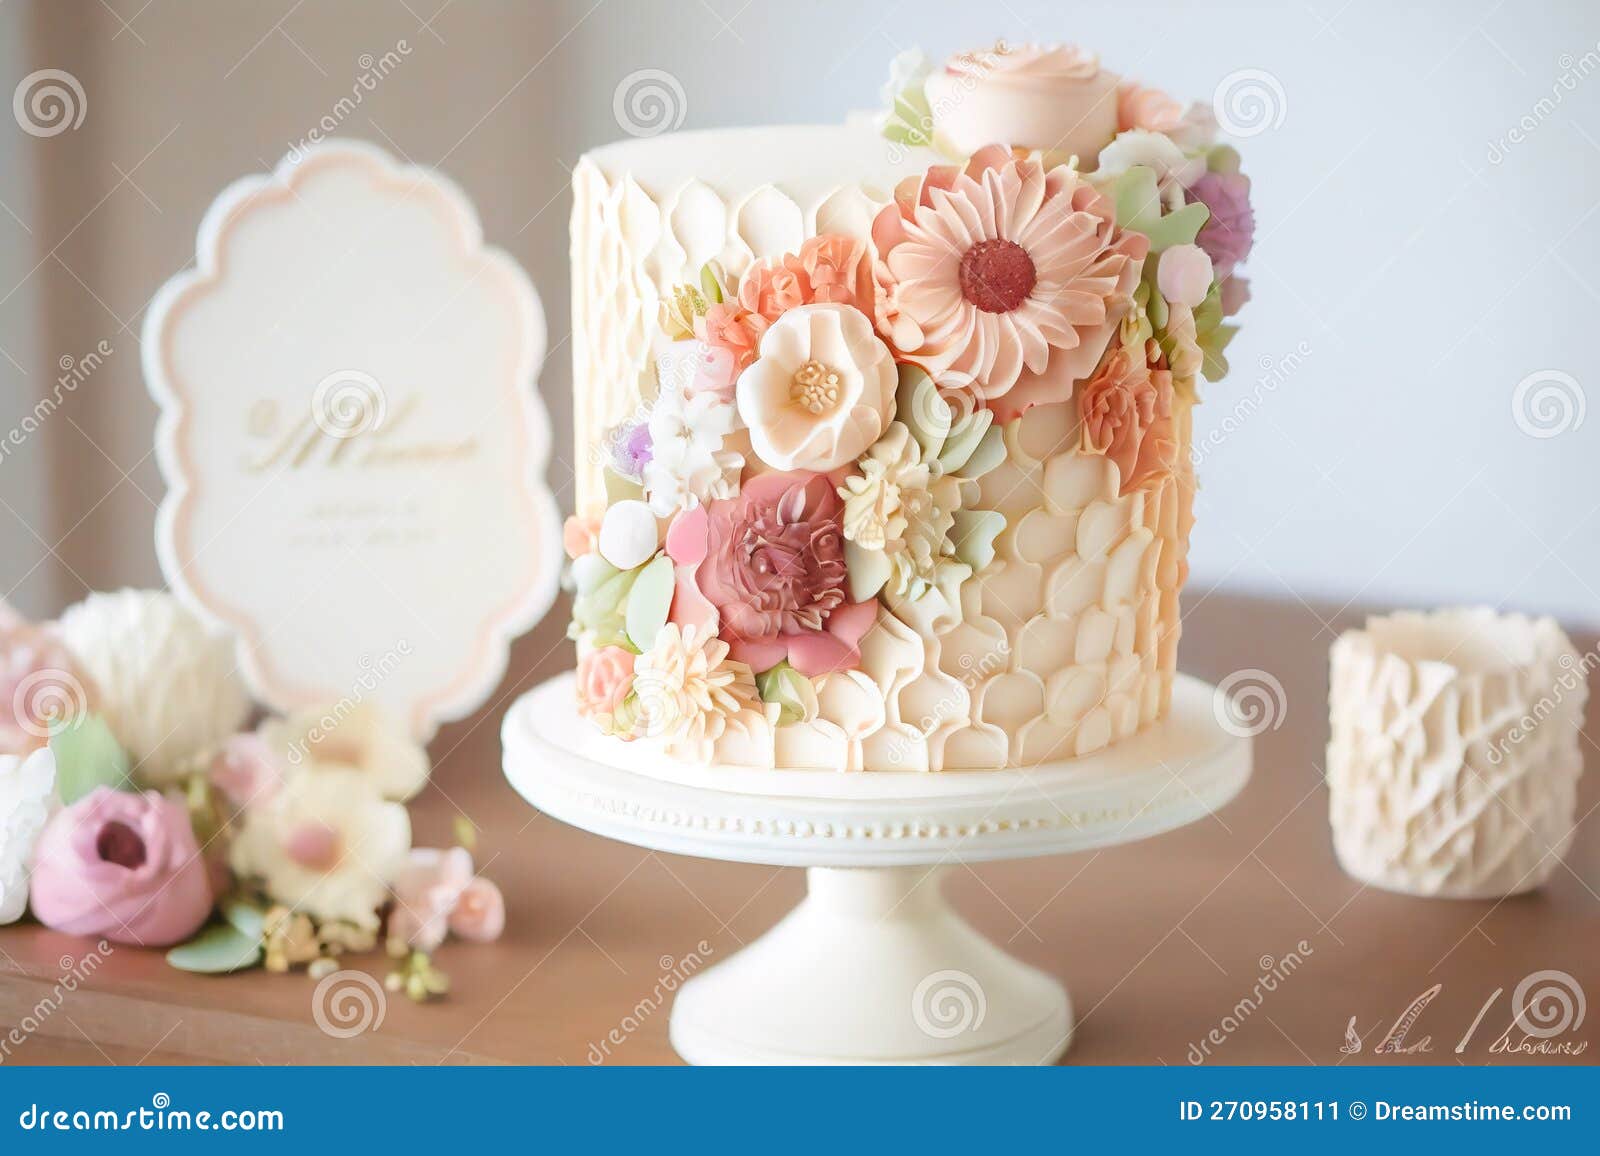 Wedding Flower Cake - Classic and Beautiful Wedding Cake ...